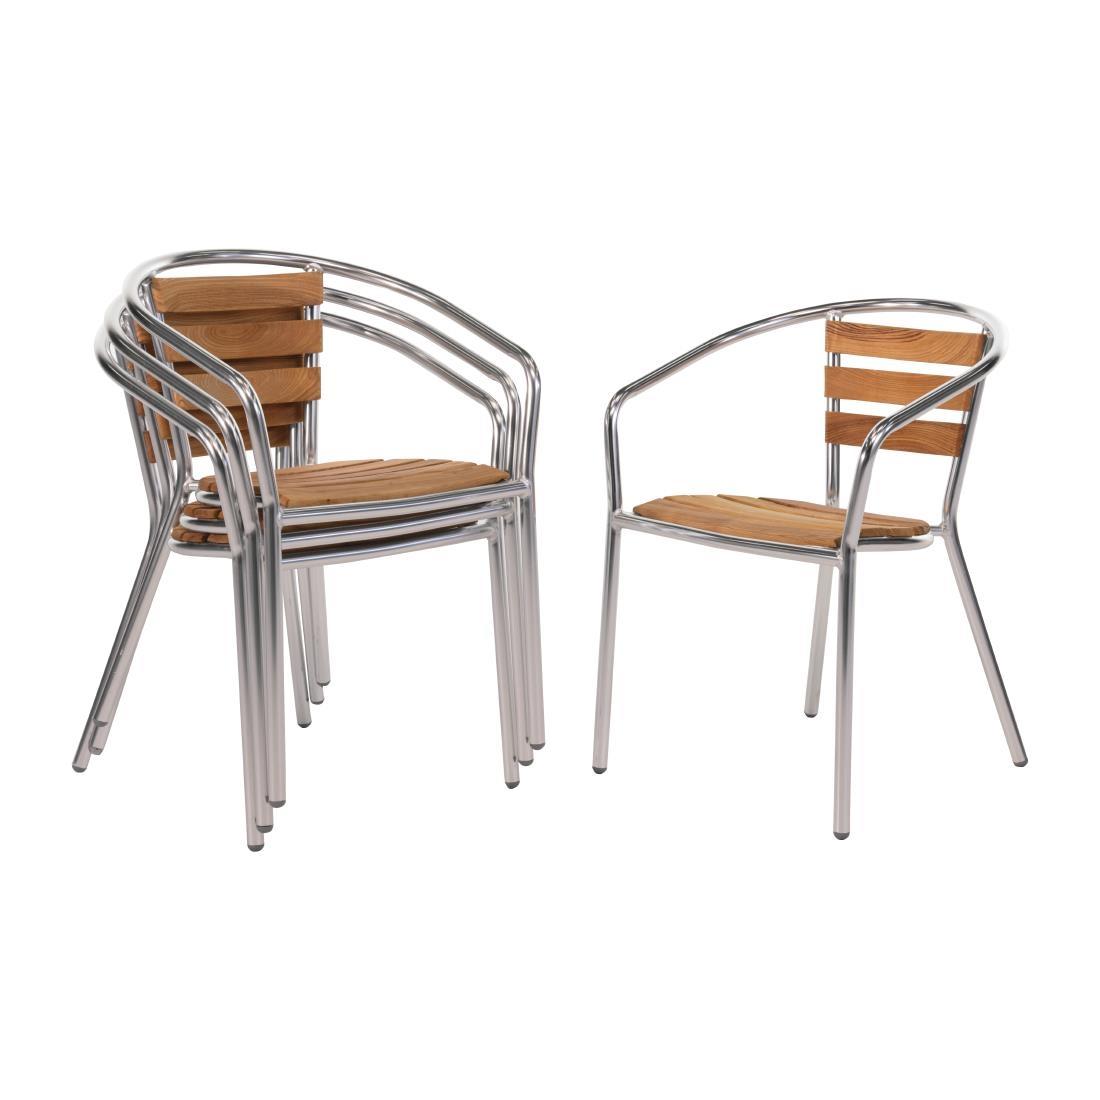 Bolero Aluminium and Ash Chairs (Pack of 4) - U421  - 1